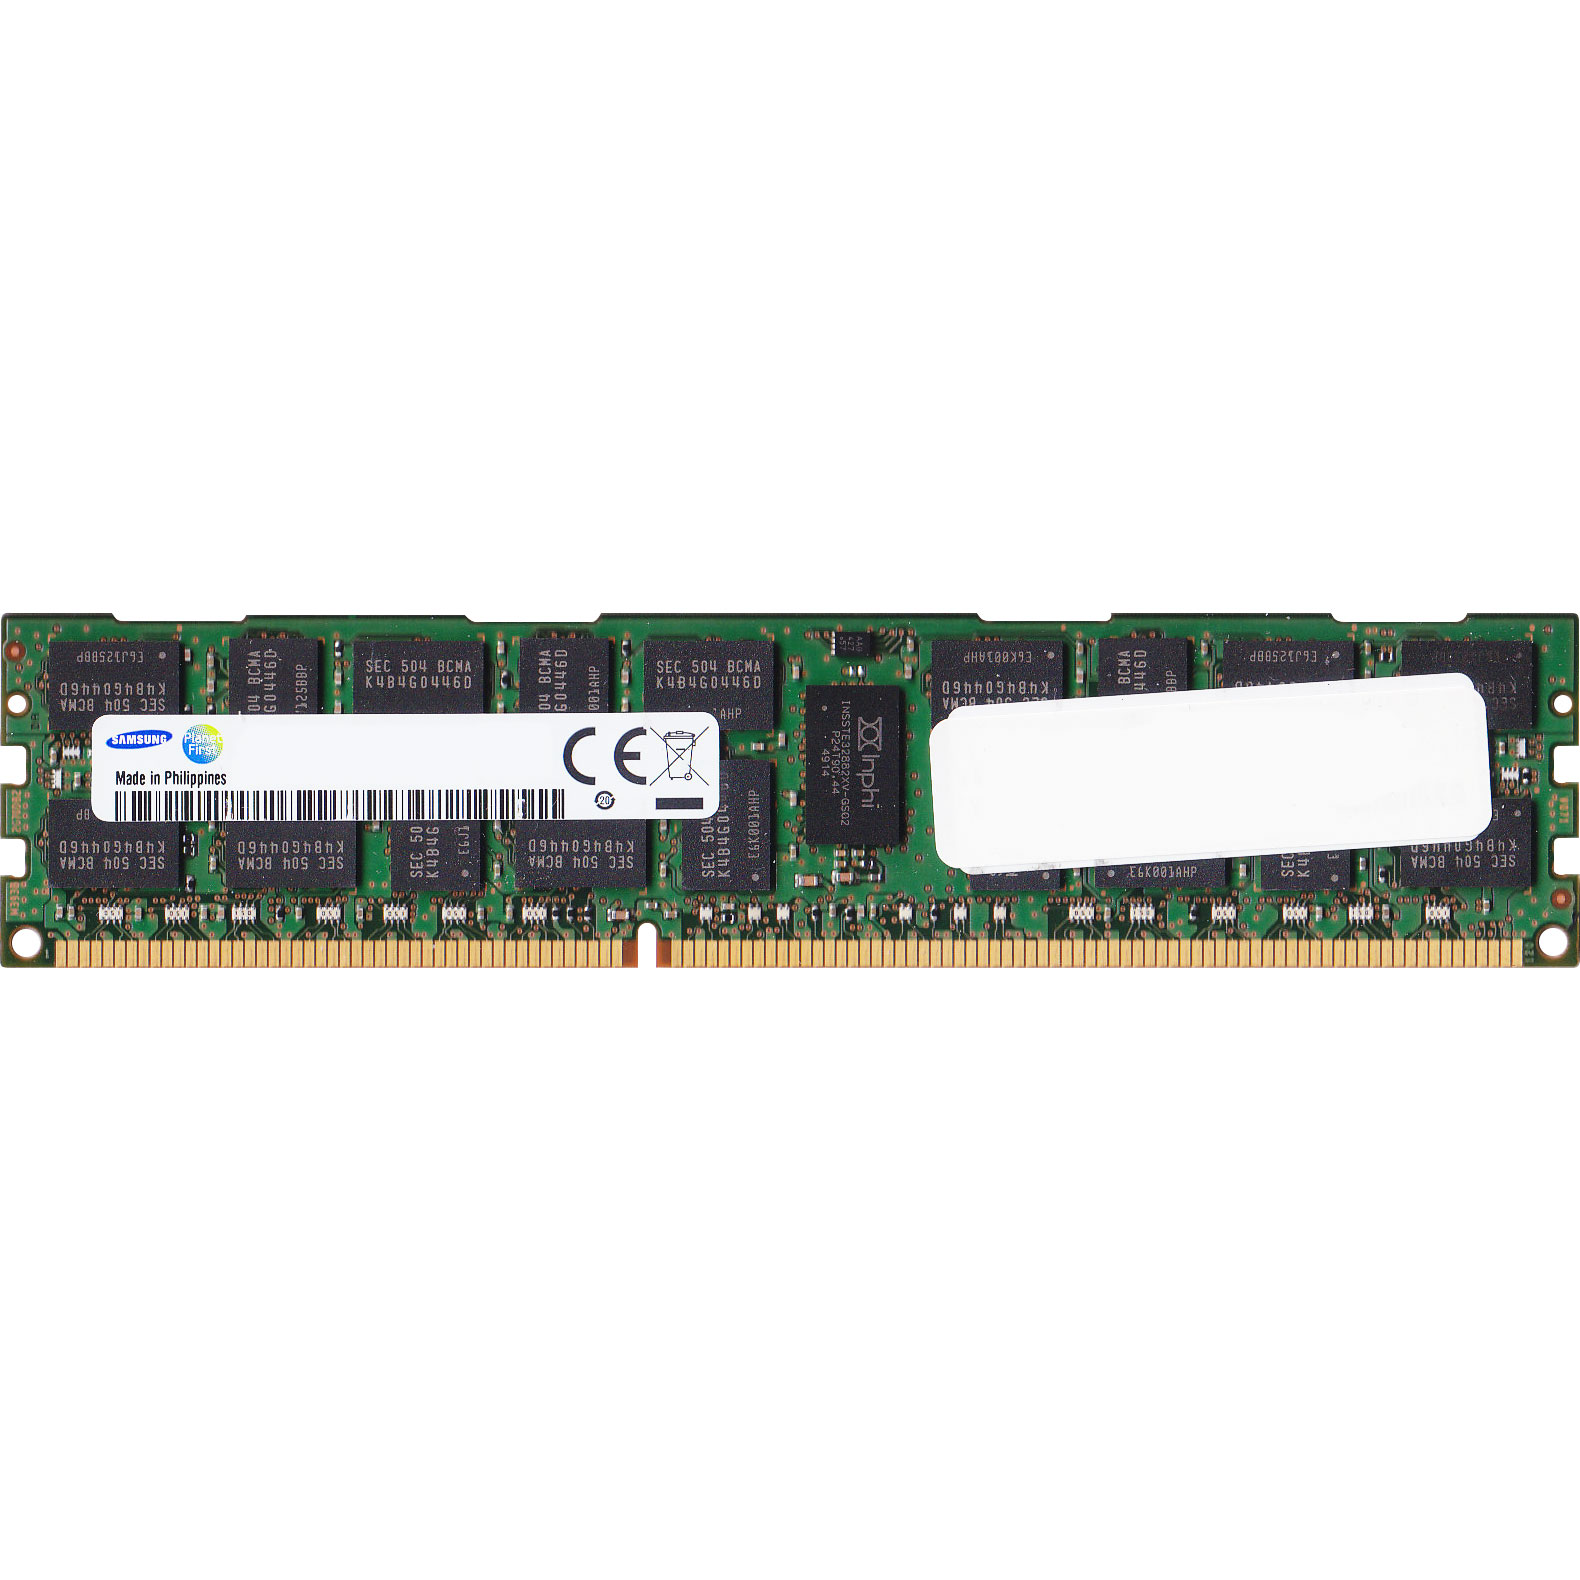 Samsung DDR3 ECC SDRAM 1866MHz 16GB [240-1866-16GB-SA]